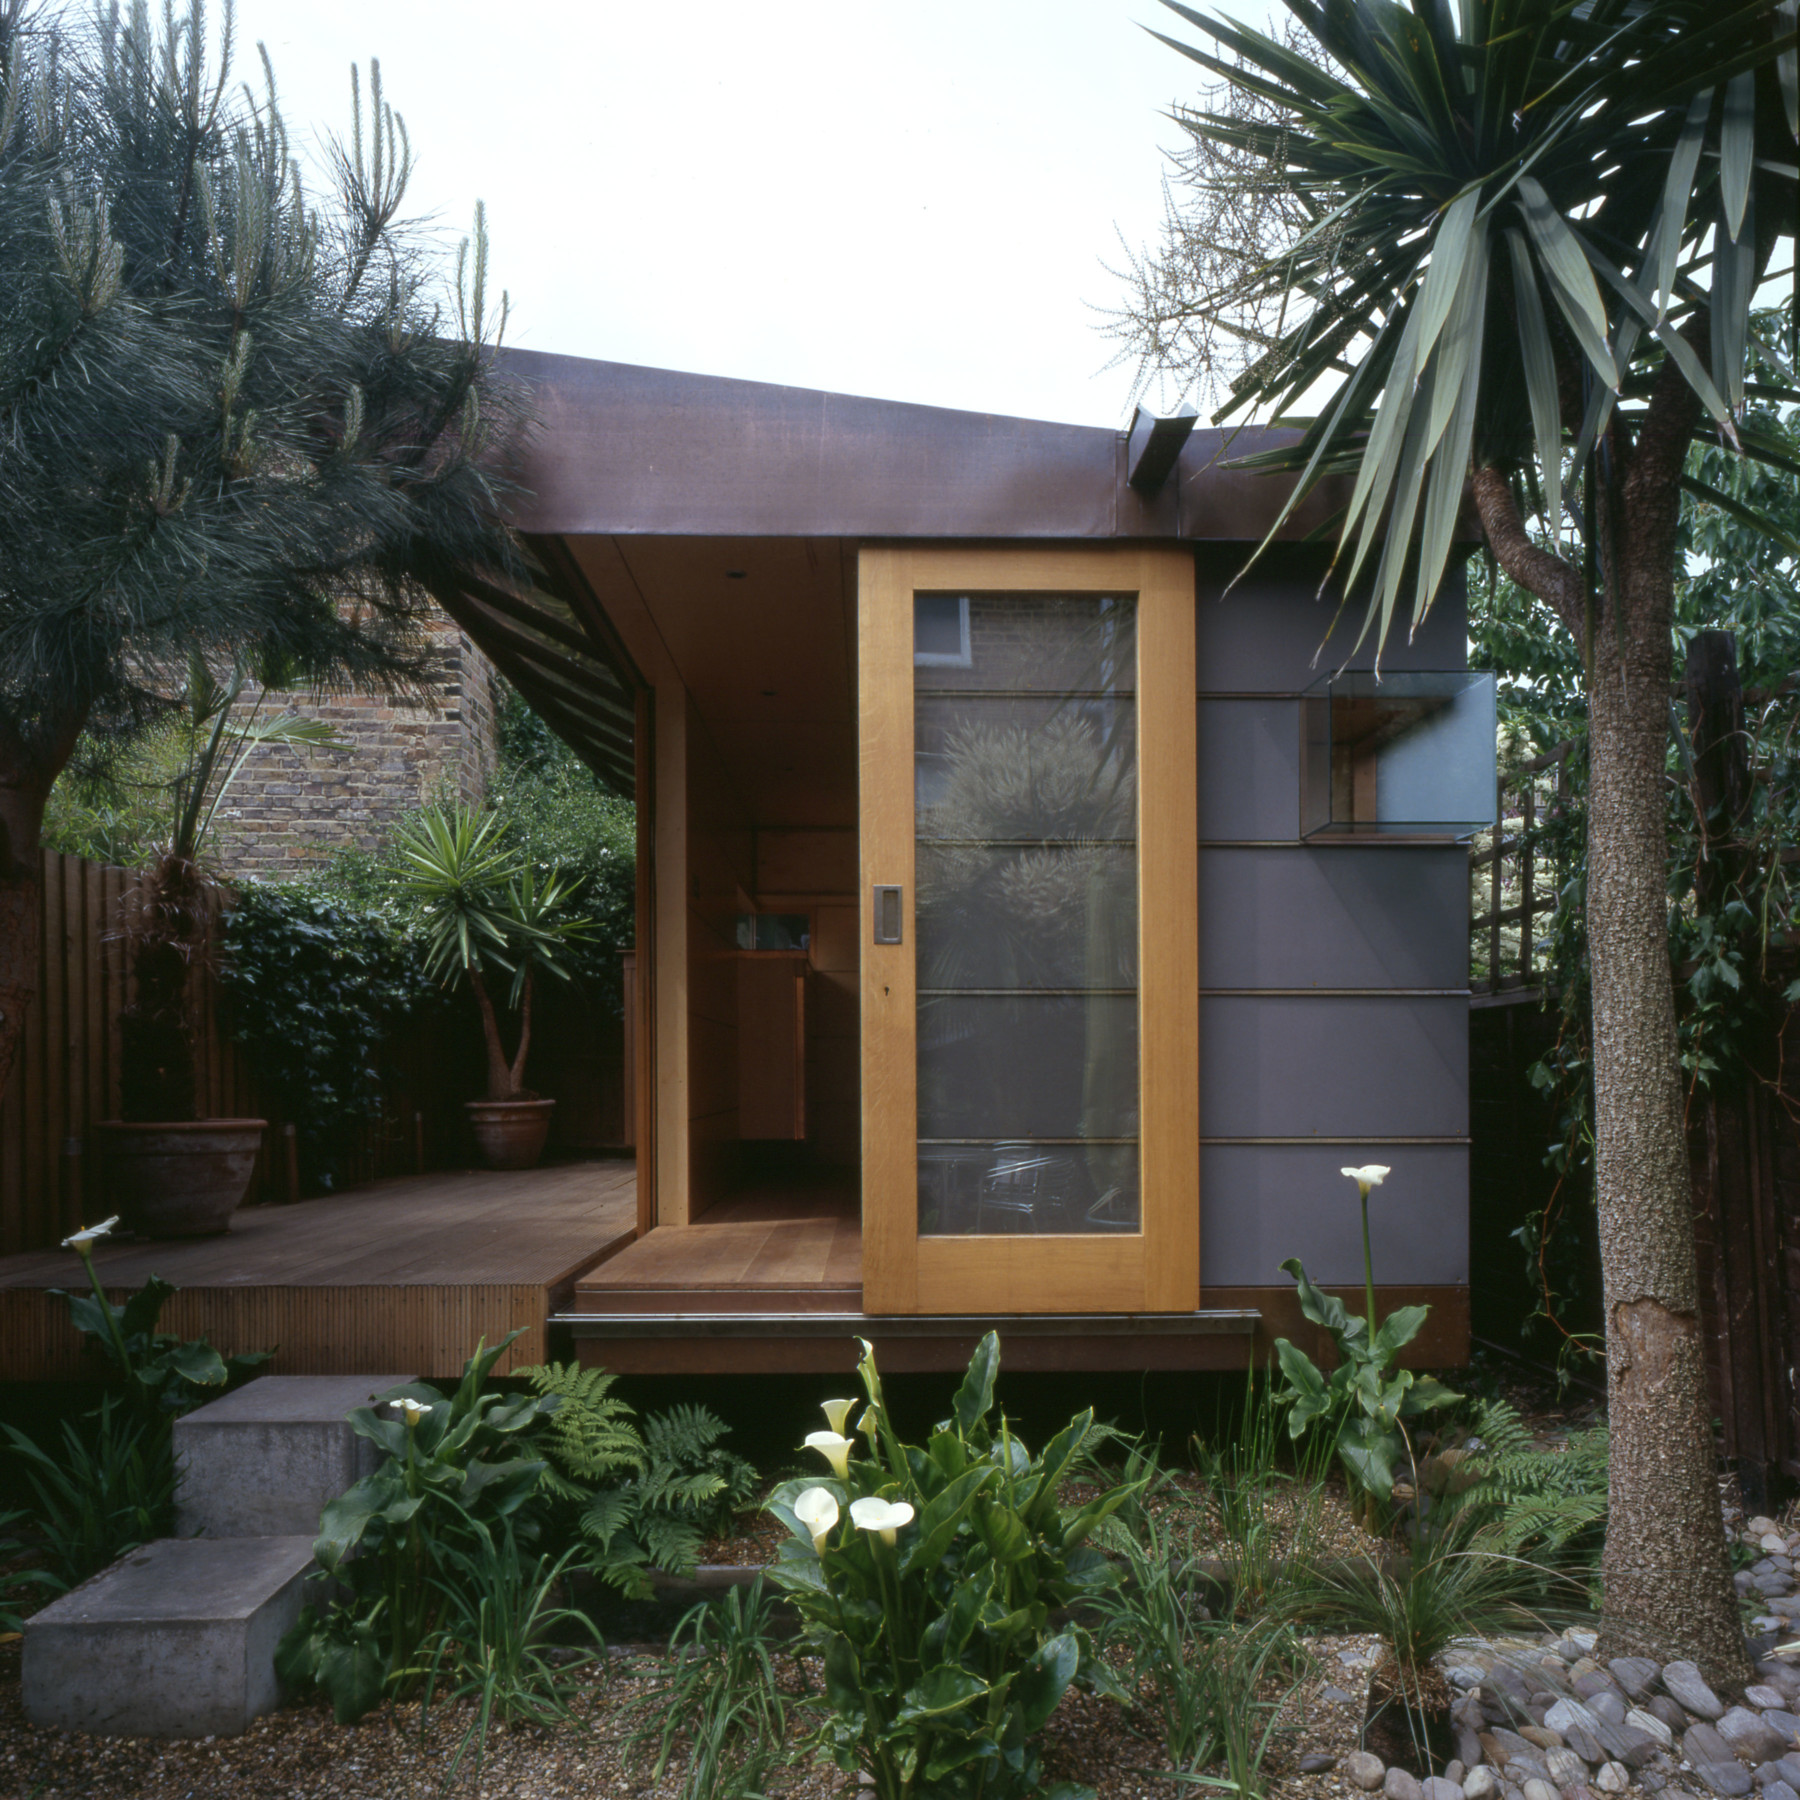 Sarah-Wigglesworth-Architects Garden Studio Cover 3600